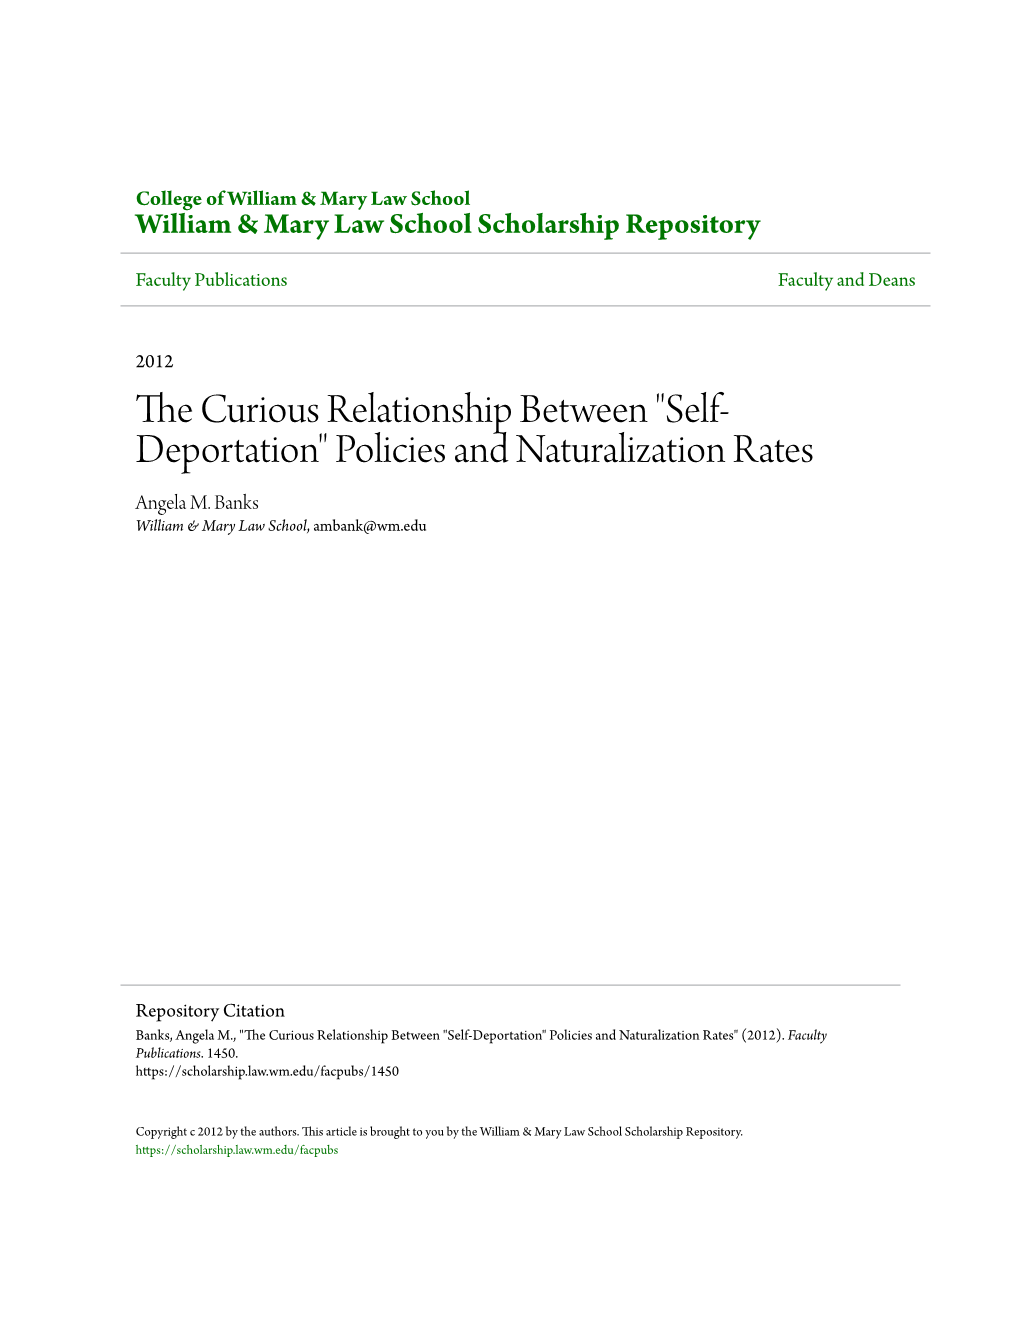 "Self-Deportation" Policies and Naturalization Rates" (2012)